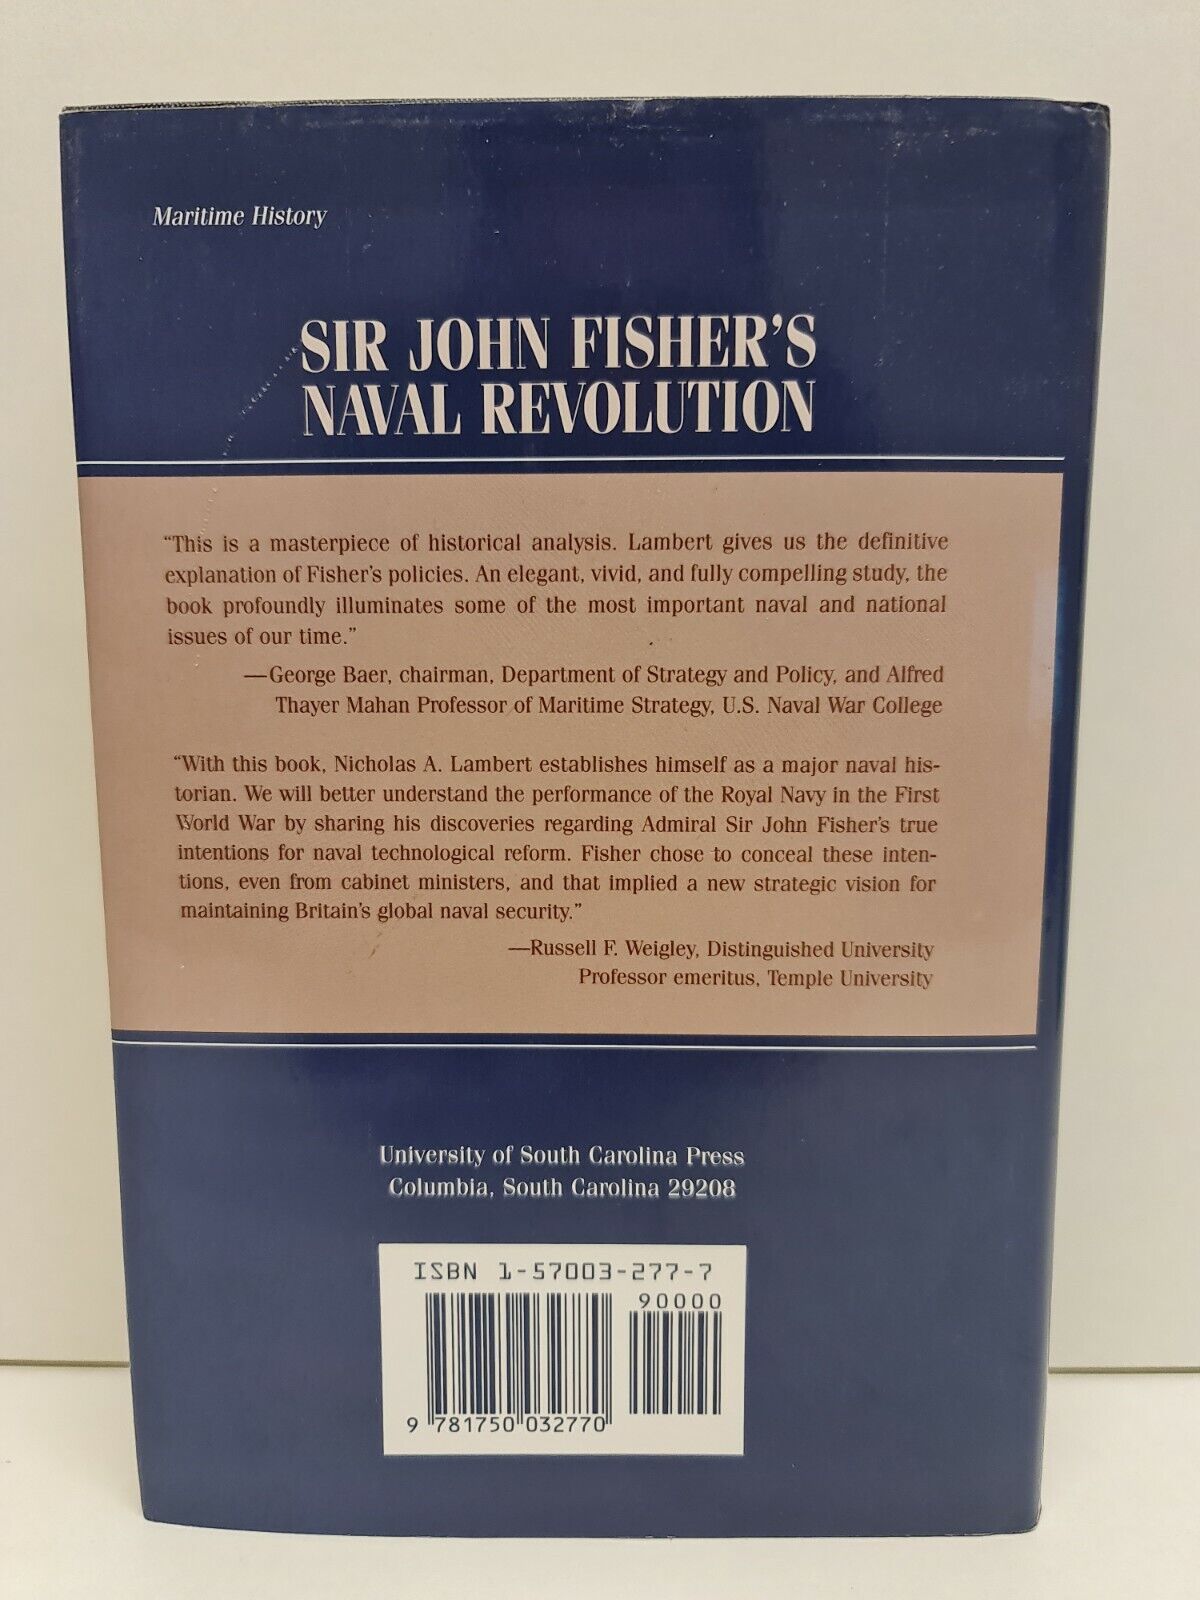 Sir John Fisher's Naval Revolution by Nicholas A. Lambert (1999)